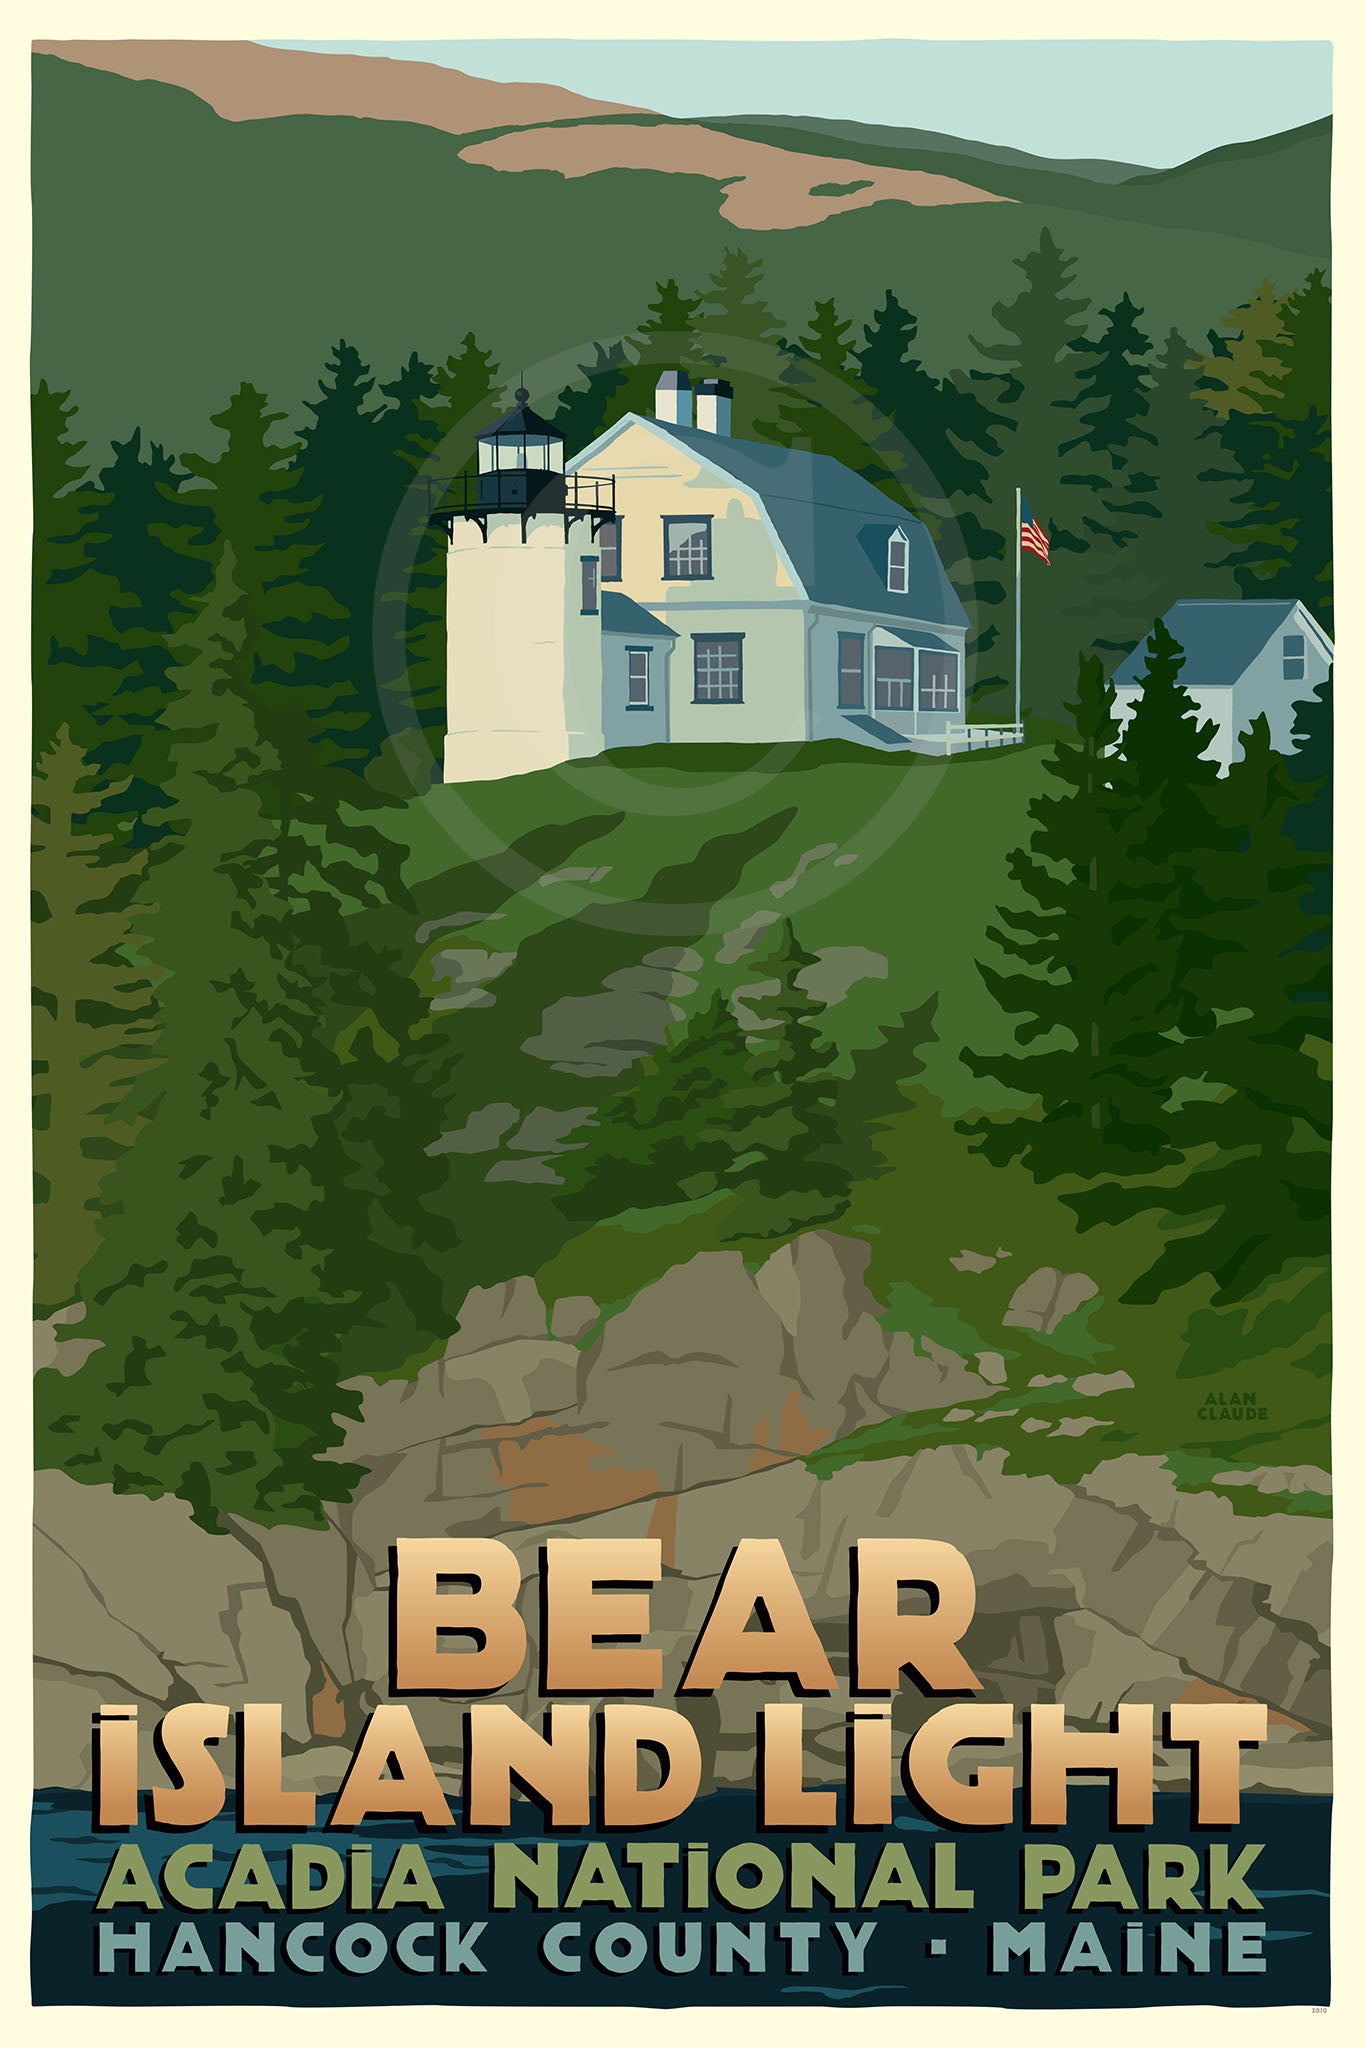 Bear Island Light Art Print 36" x 53" Travel Poster By Alan Claude - Maine